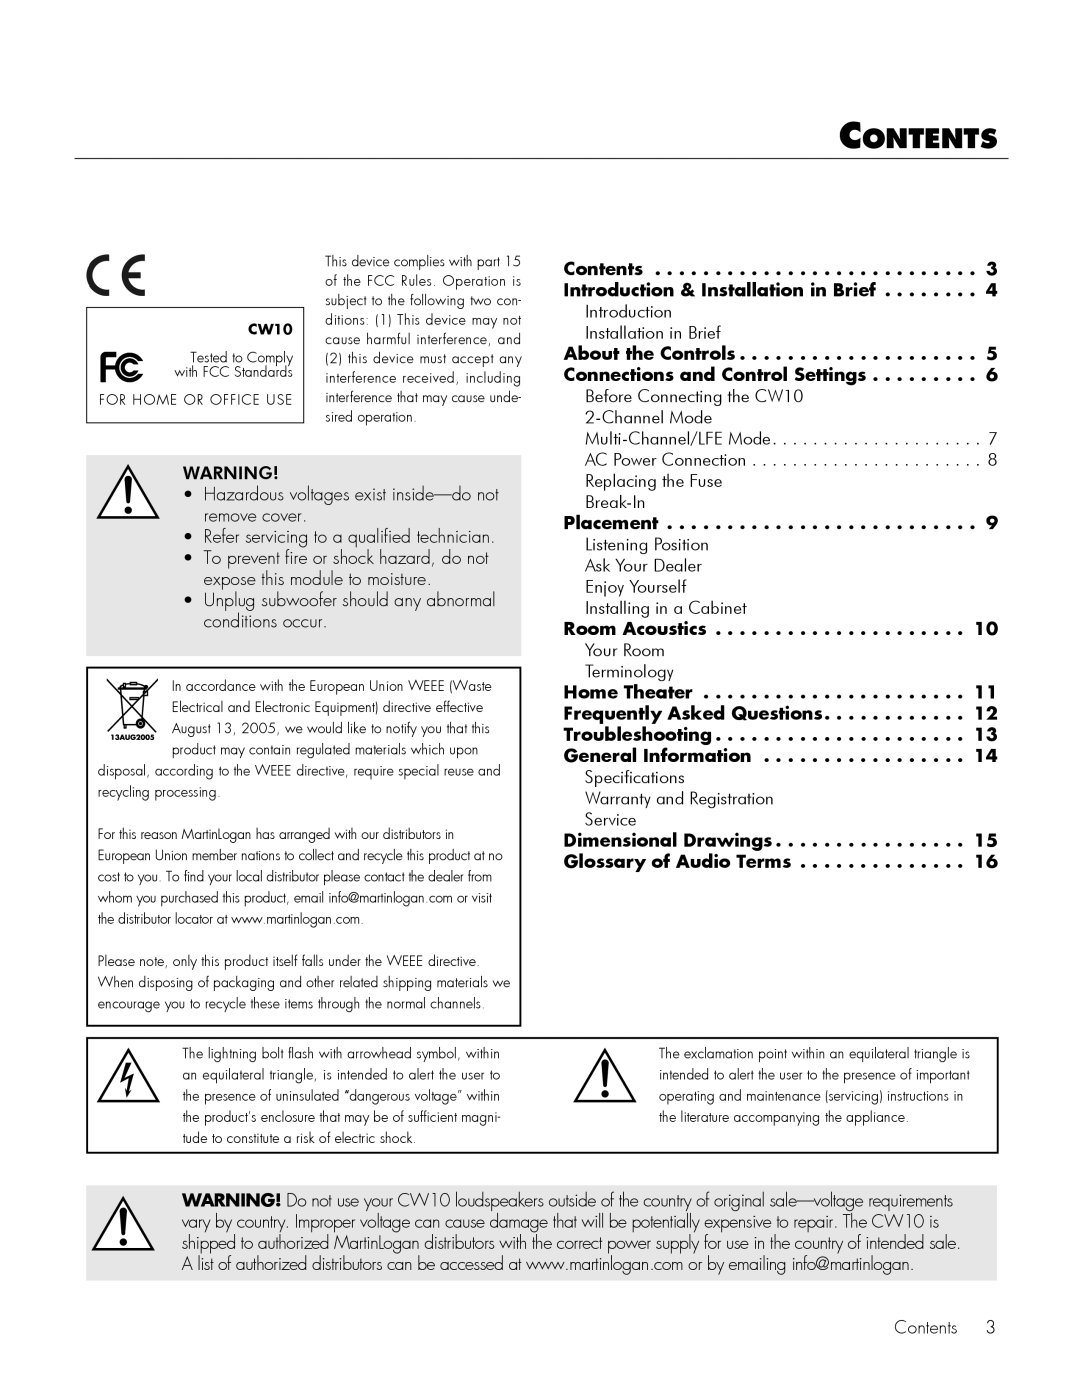 MartinLogan CW10 user manual Contents 